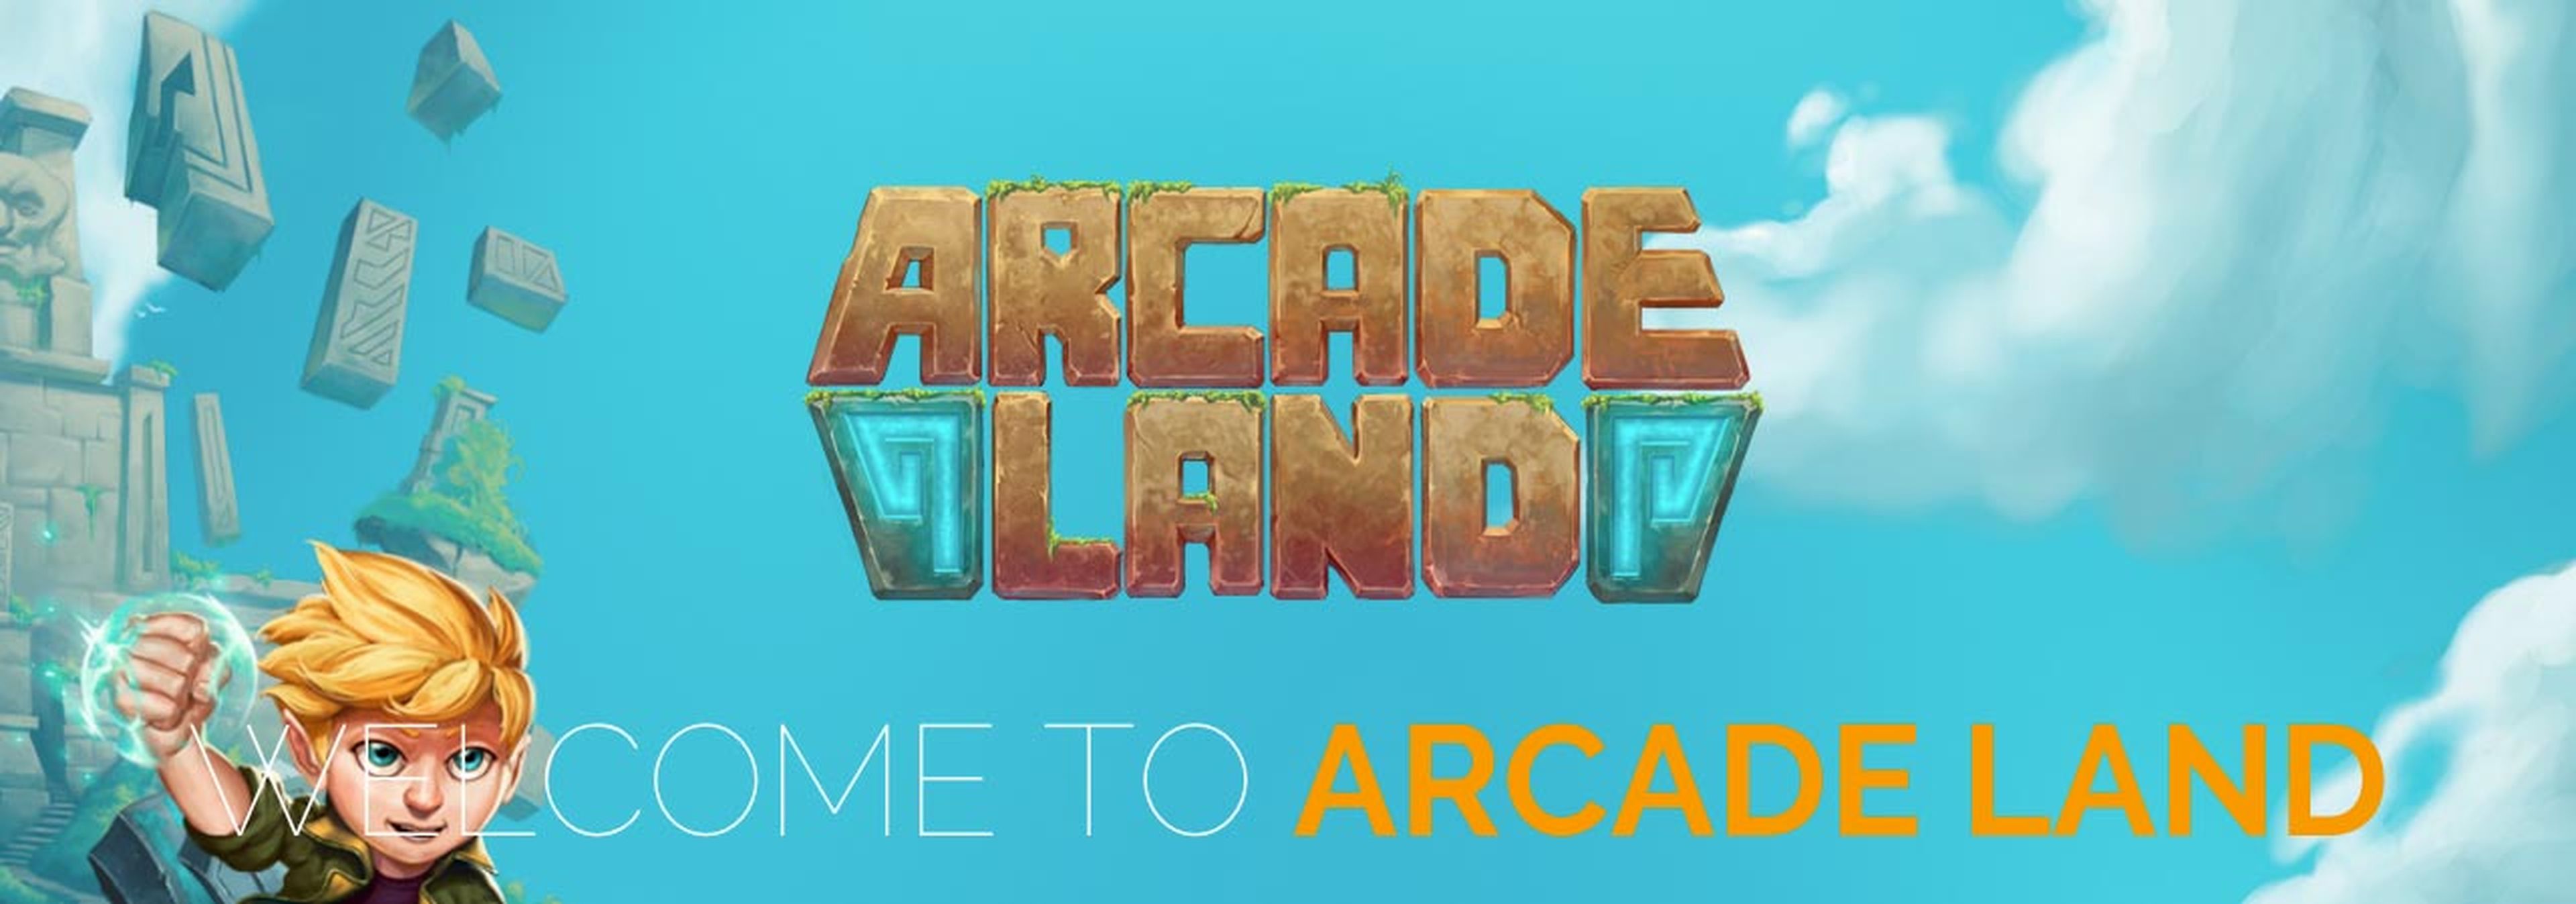 Arcade Land Web